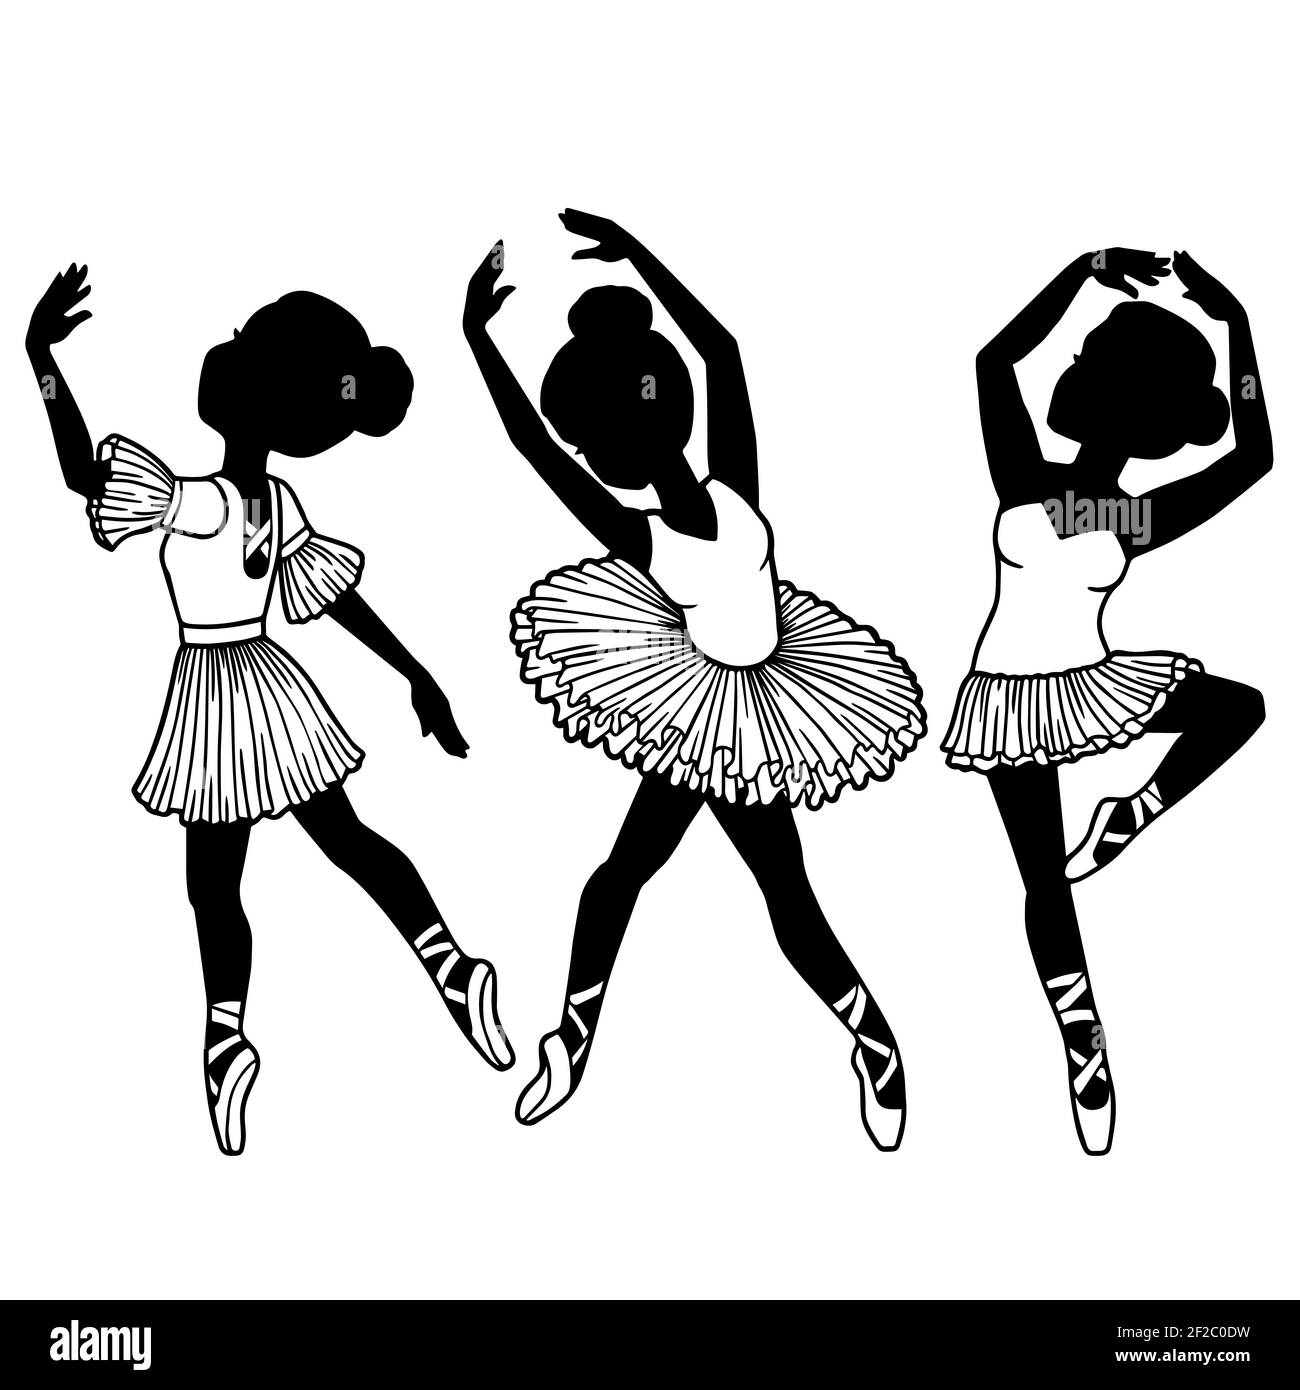 Siluetas de bailarinas de niñas pequeñas sobre un fondo blanco.  ilustración, impresión, vector